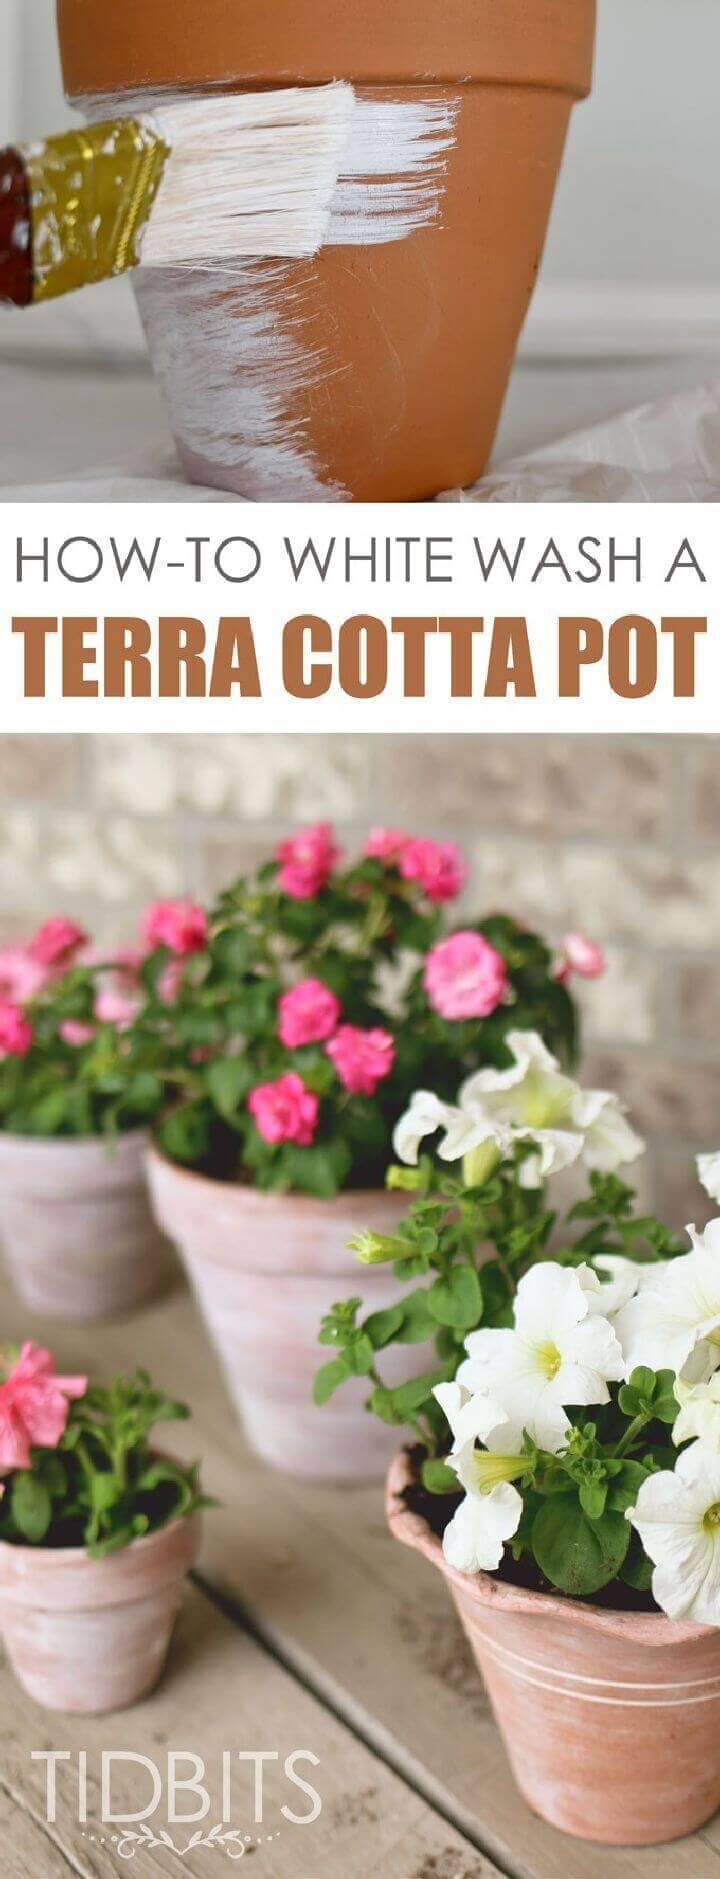 White Washed Terra Cotta Pots